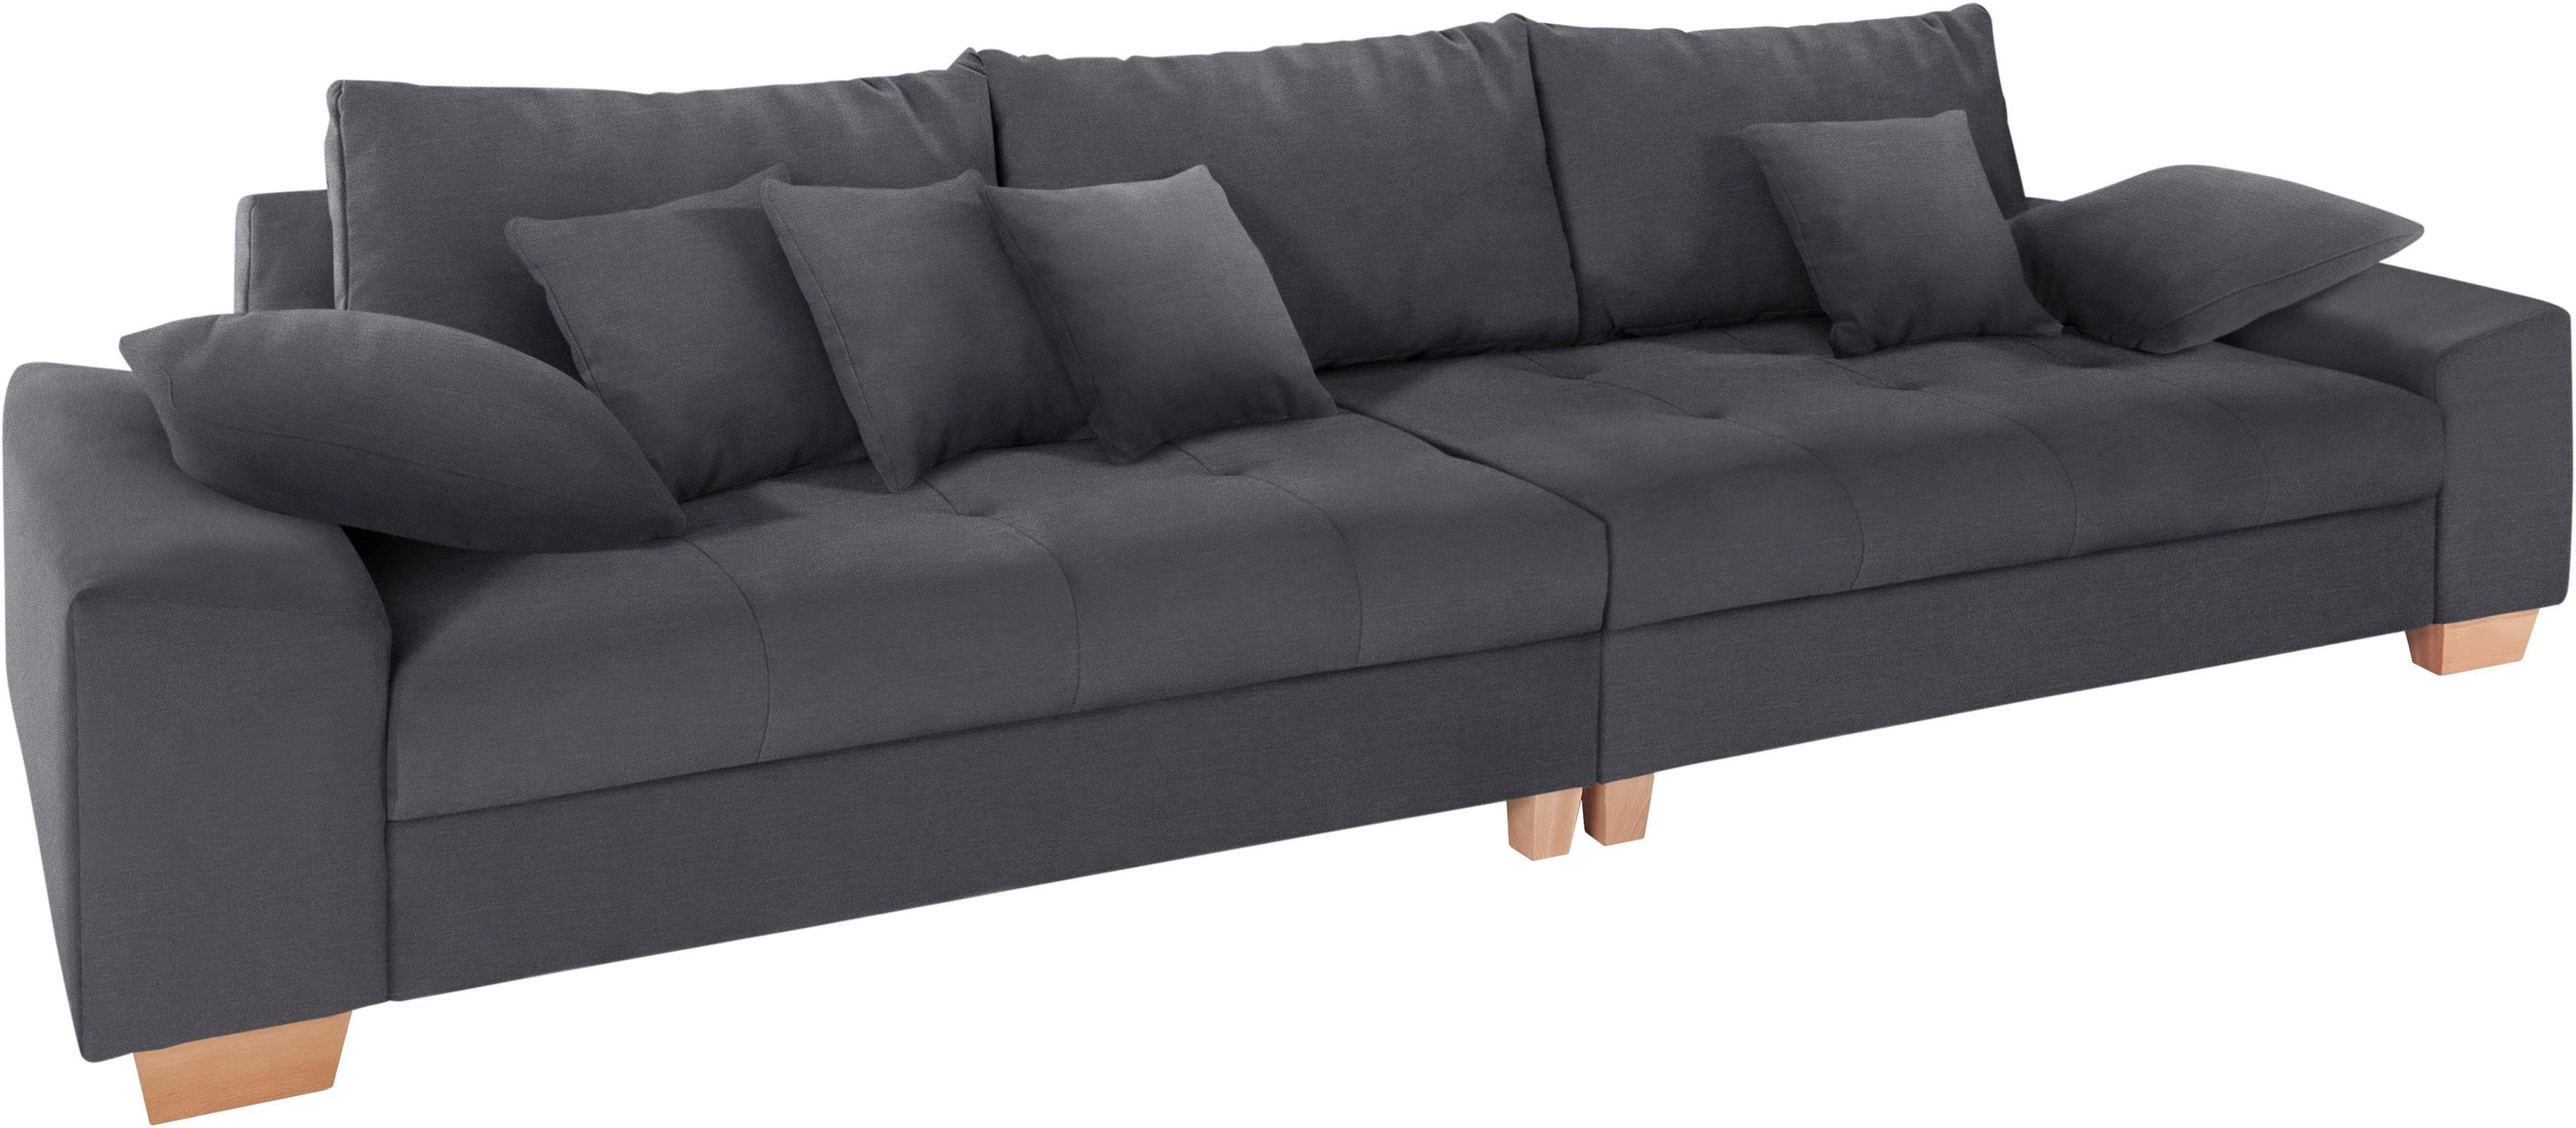 Mr. Couch Big-Sofa Nikita, wahlweise mit Kaltschaum (140kg Belastung/Sitz)  und AquaClean-Stoff | Big Sofas